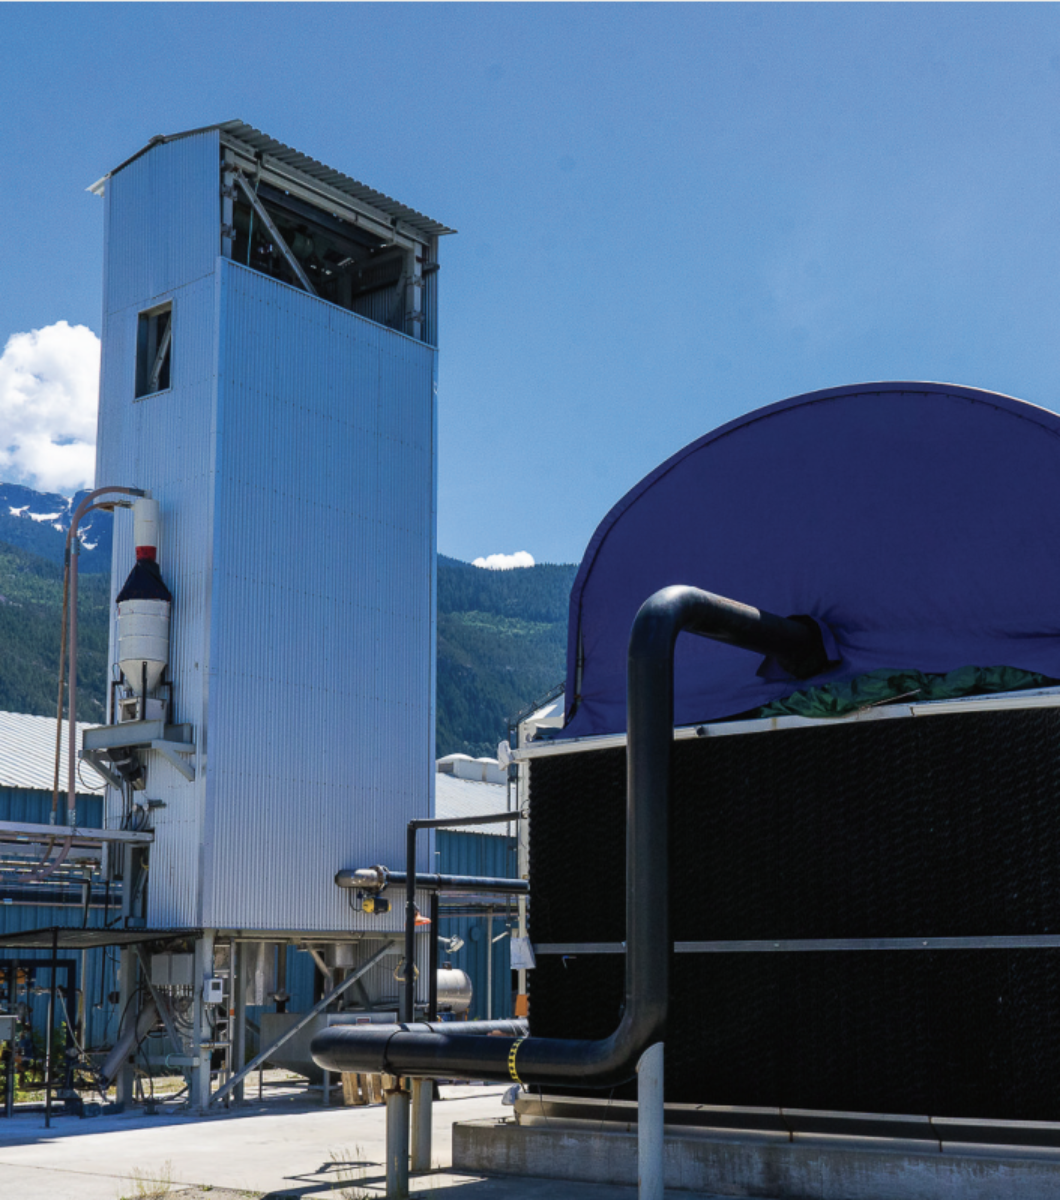 Carbon Engineering’s DAC pilot plant in Squamish, Canada